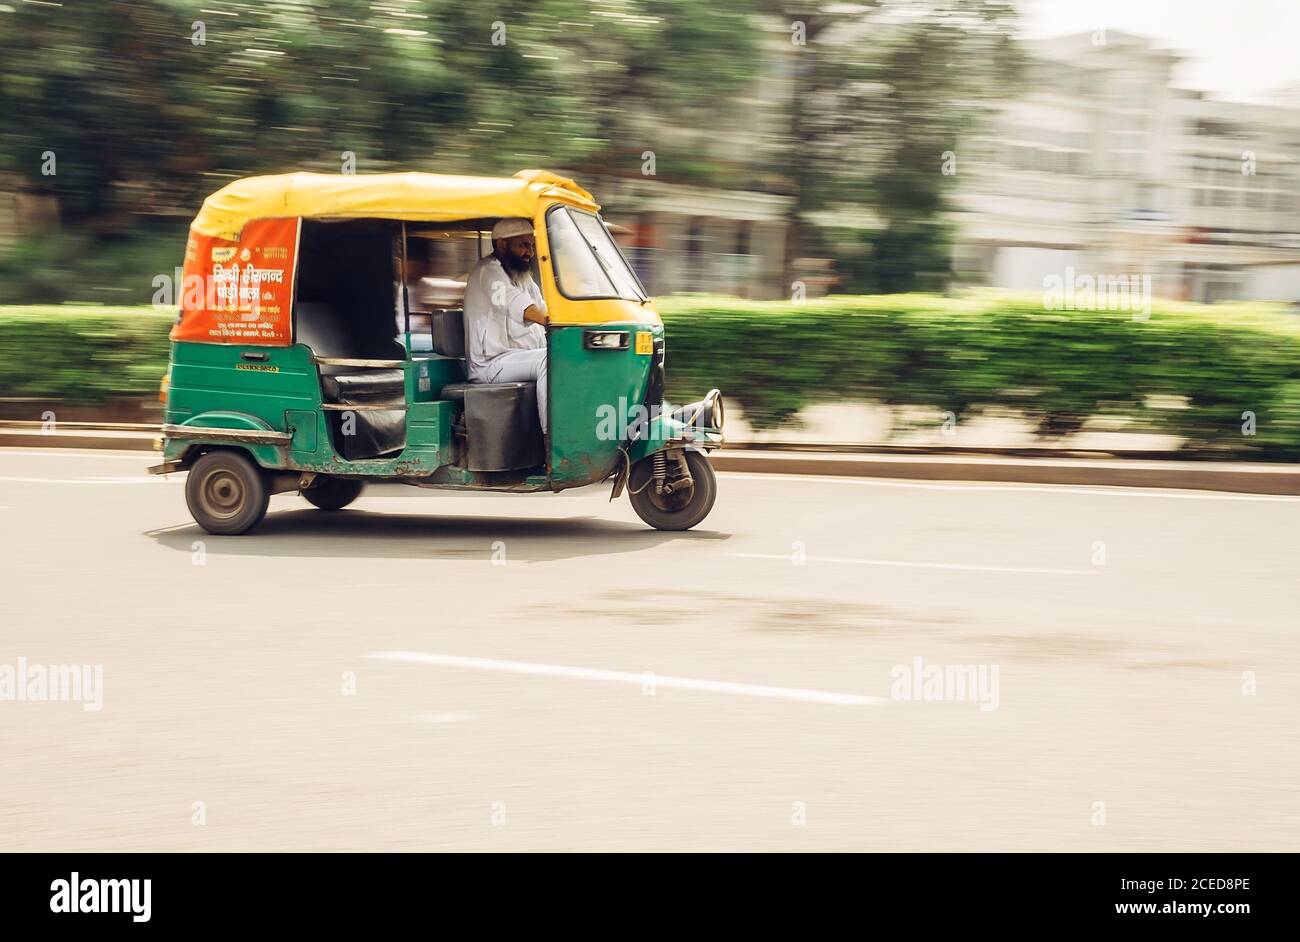 New Delhi, India - AUGUST 13: Moto-Rickshaw in motion, New Delhi, India on AUGUST 13, 2016 in New Delhi, India. Stock Photo